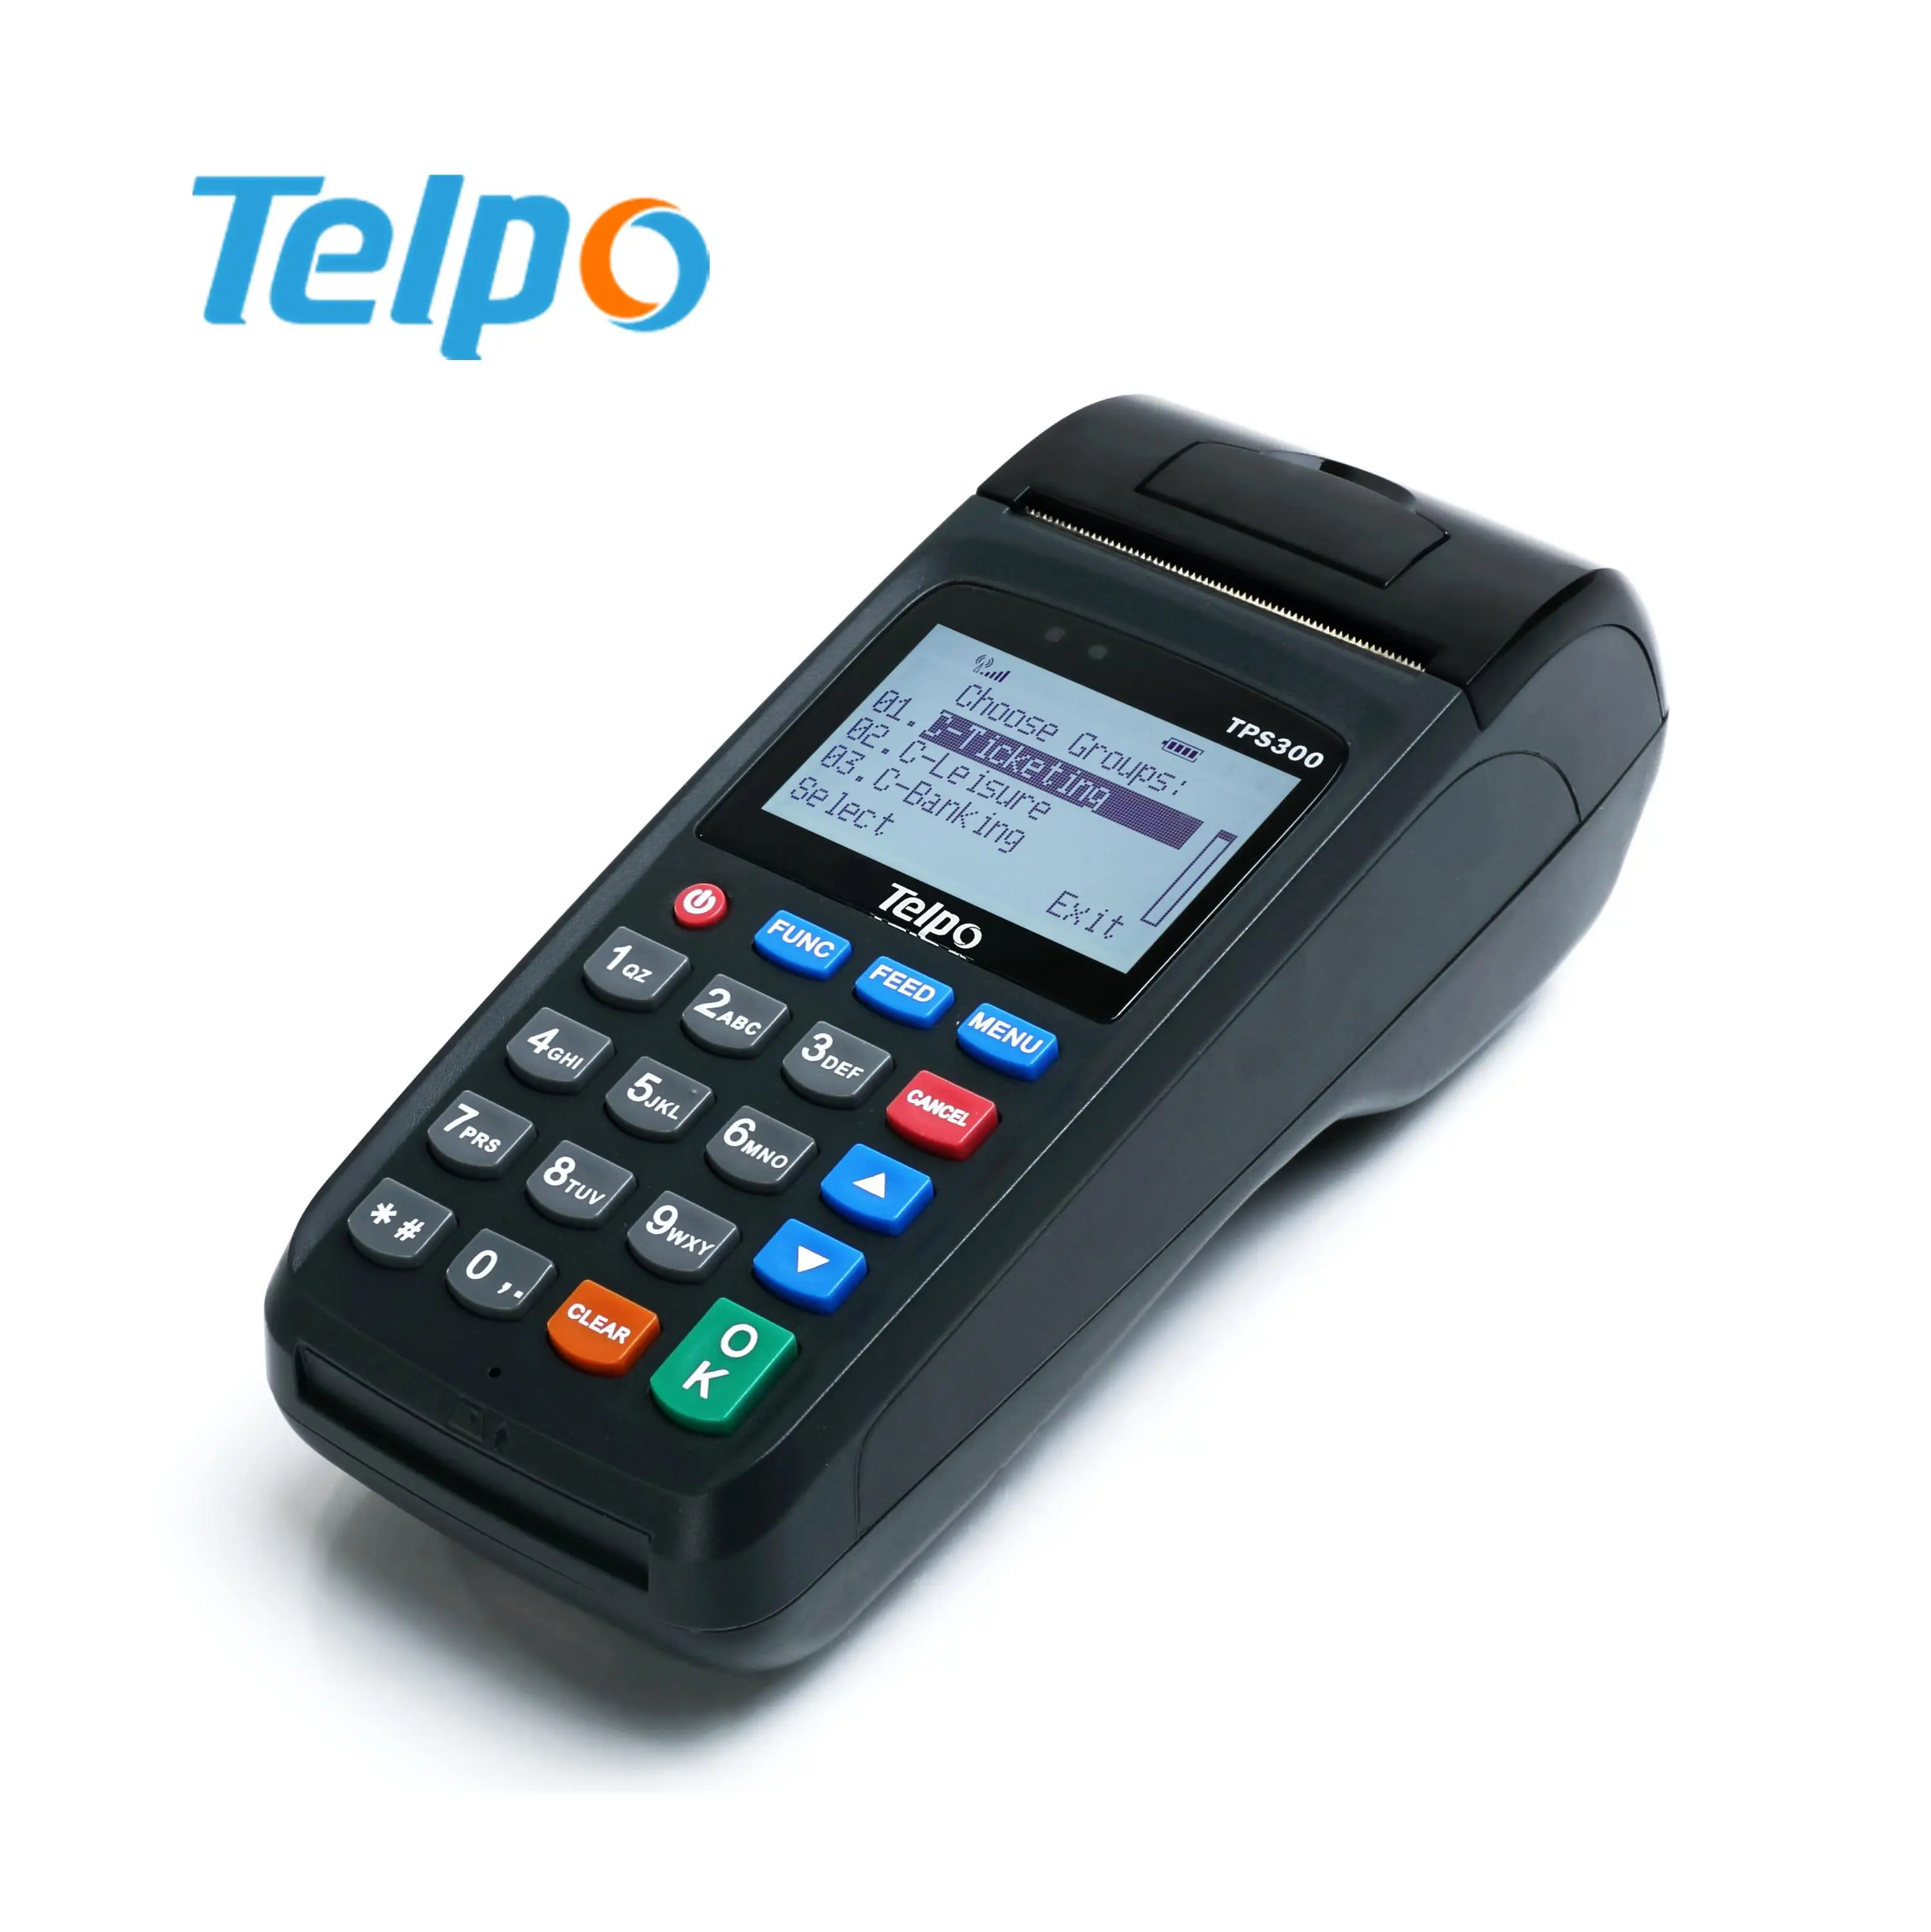 Rfid Nfc Card Reader Telpo Tps300 